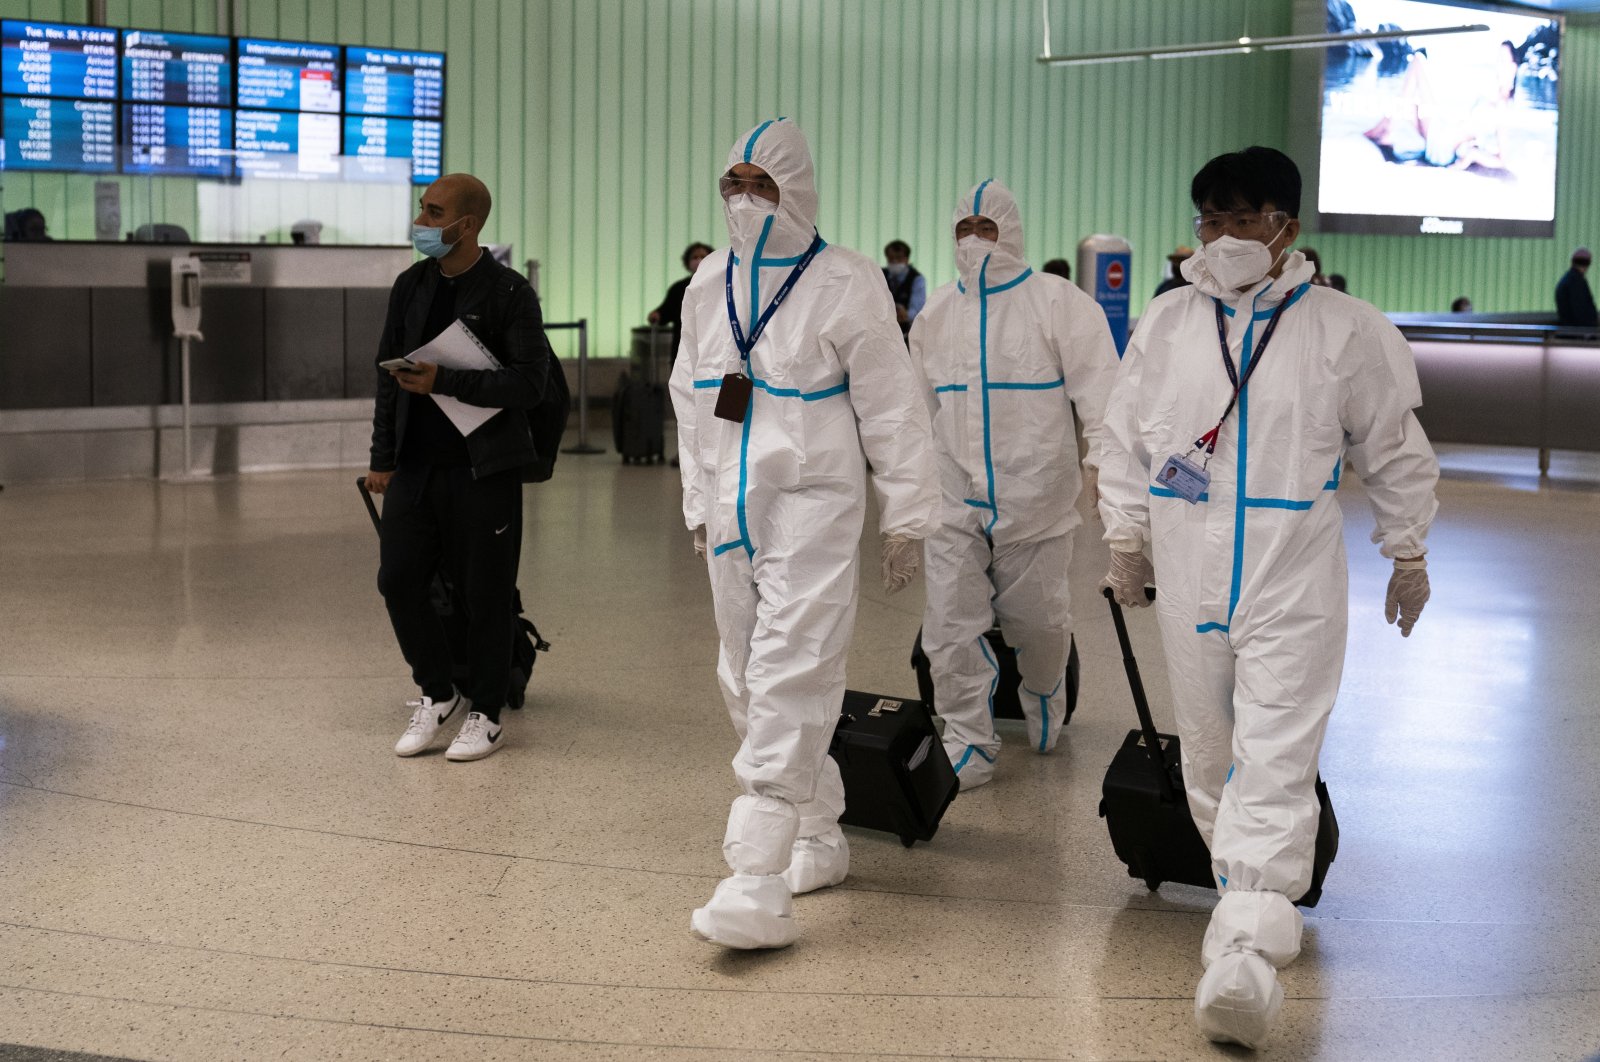 Air China flight crew members in hazmat suits walk through the arrivals area at Los Angeles International Airport in Los Angeles, California, U.S., Nov. 30, 2021. (AP Photo)